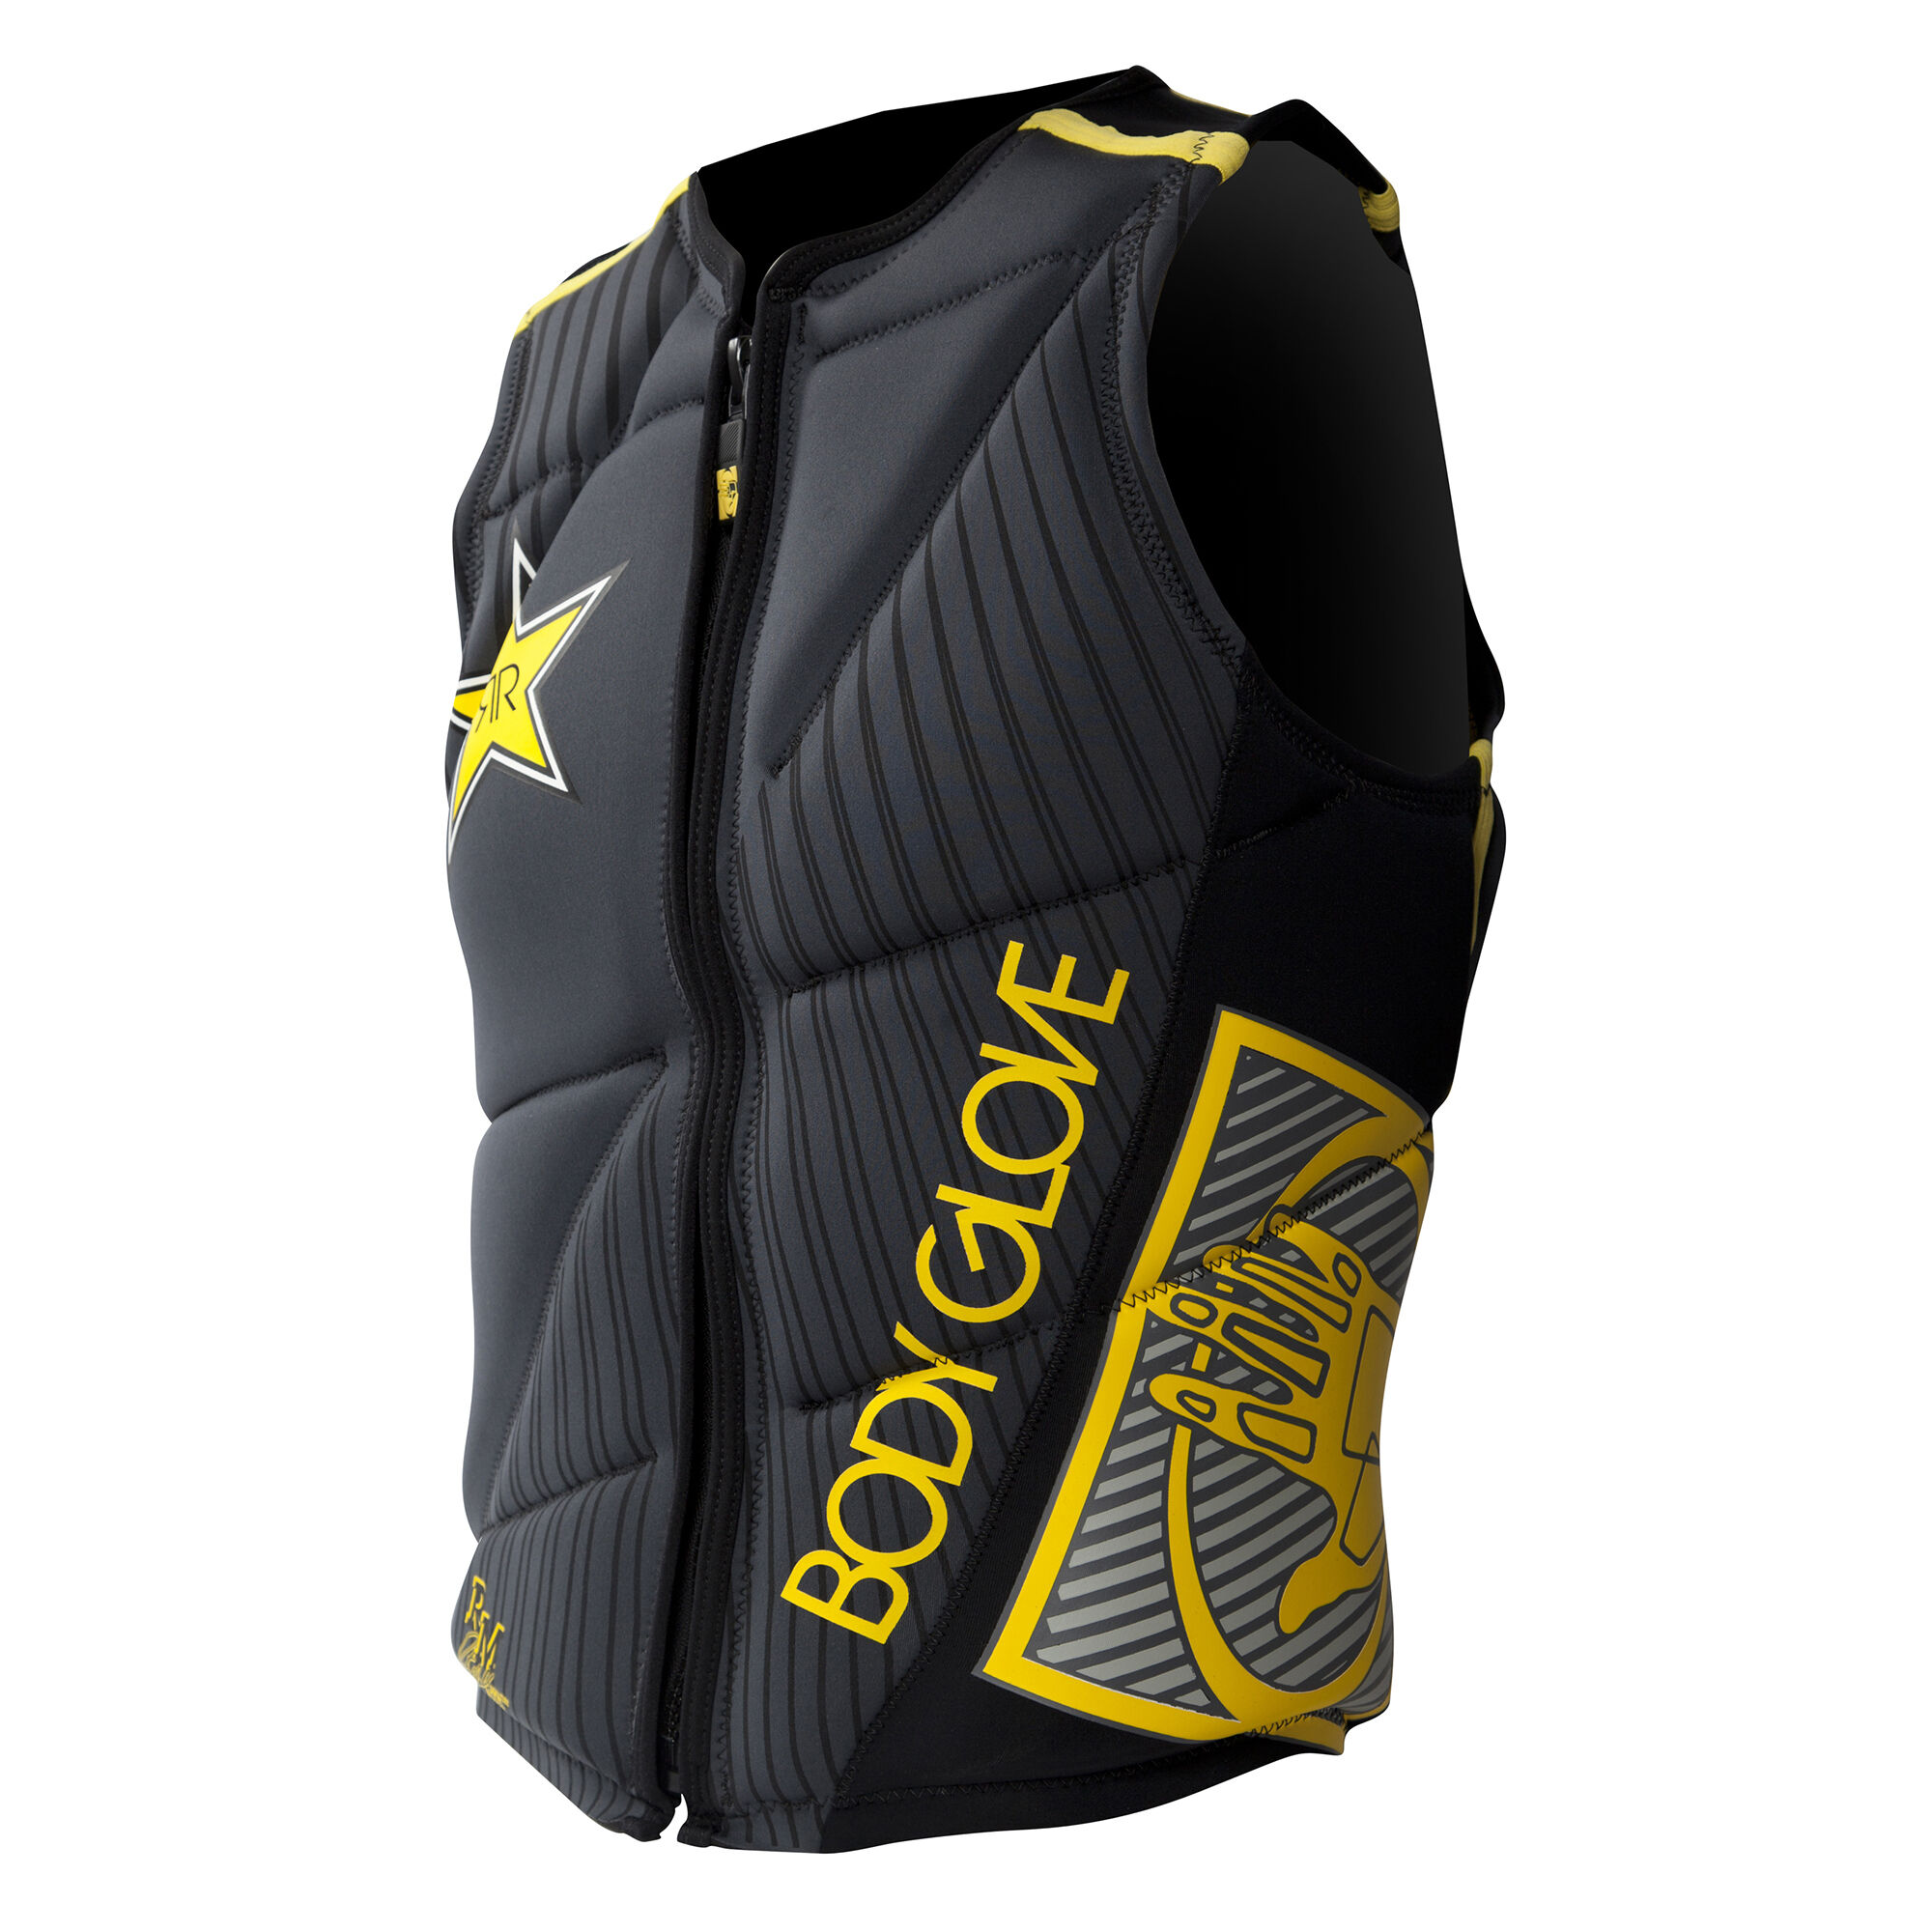 Black Comp Vest Body Glove 2020 Rockstar